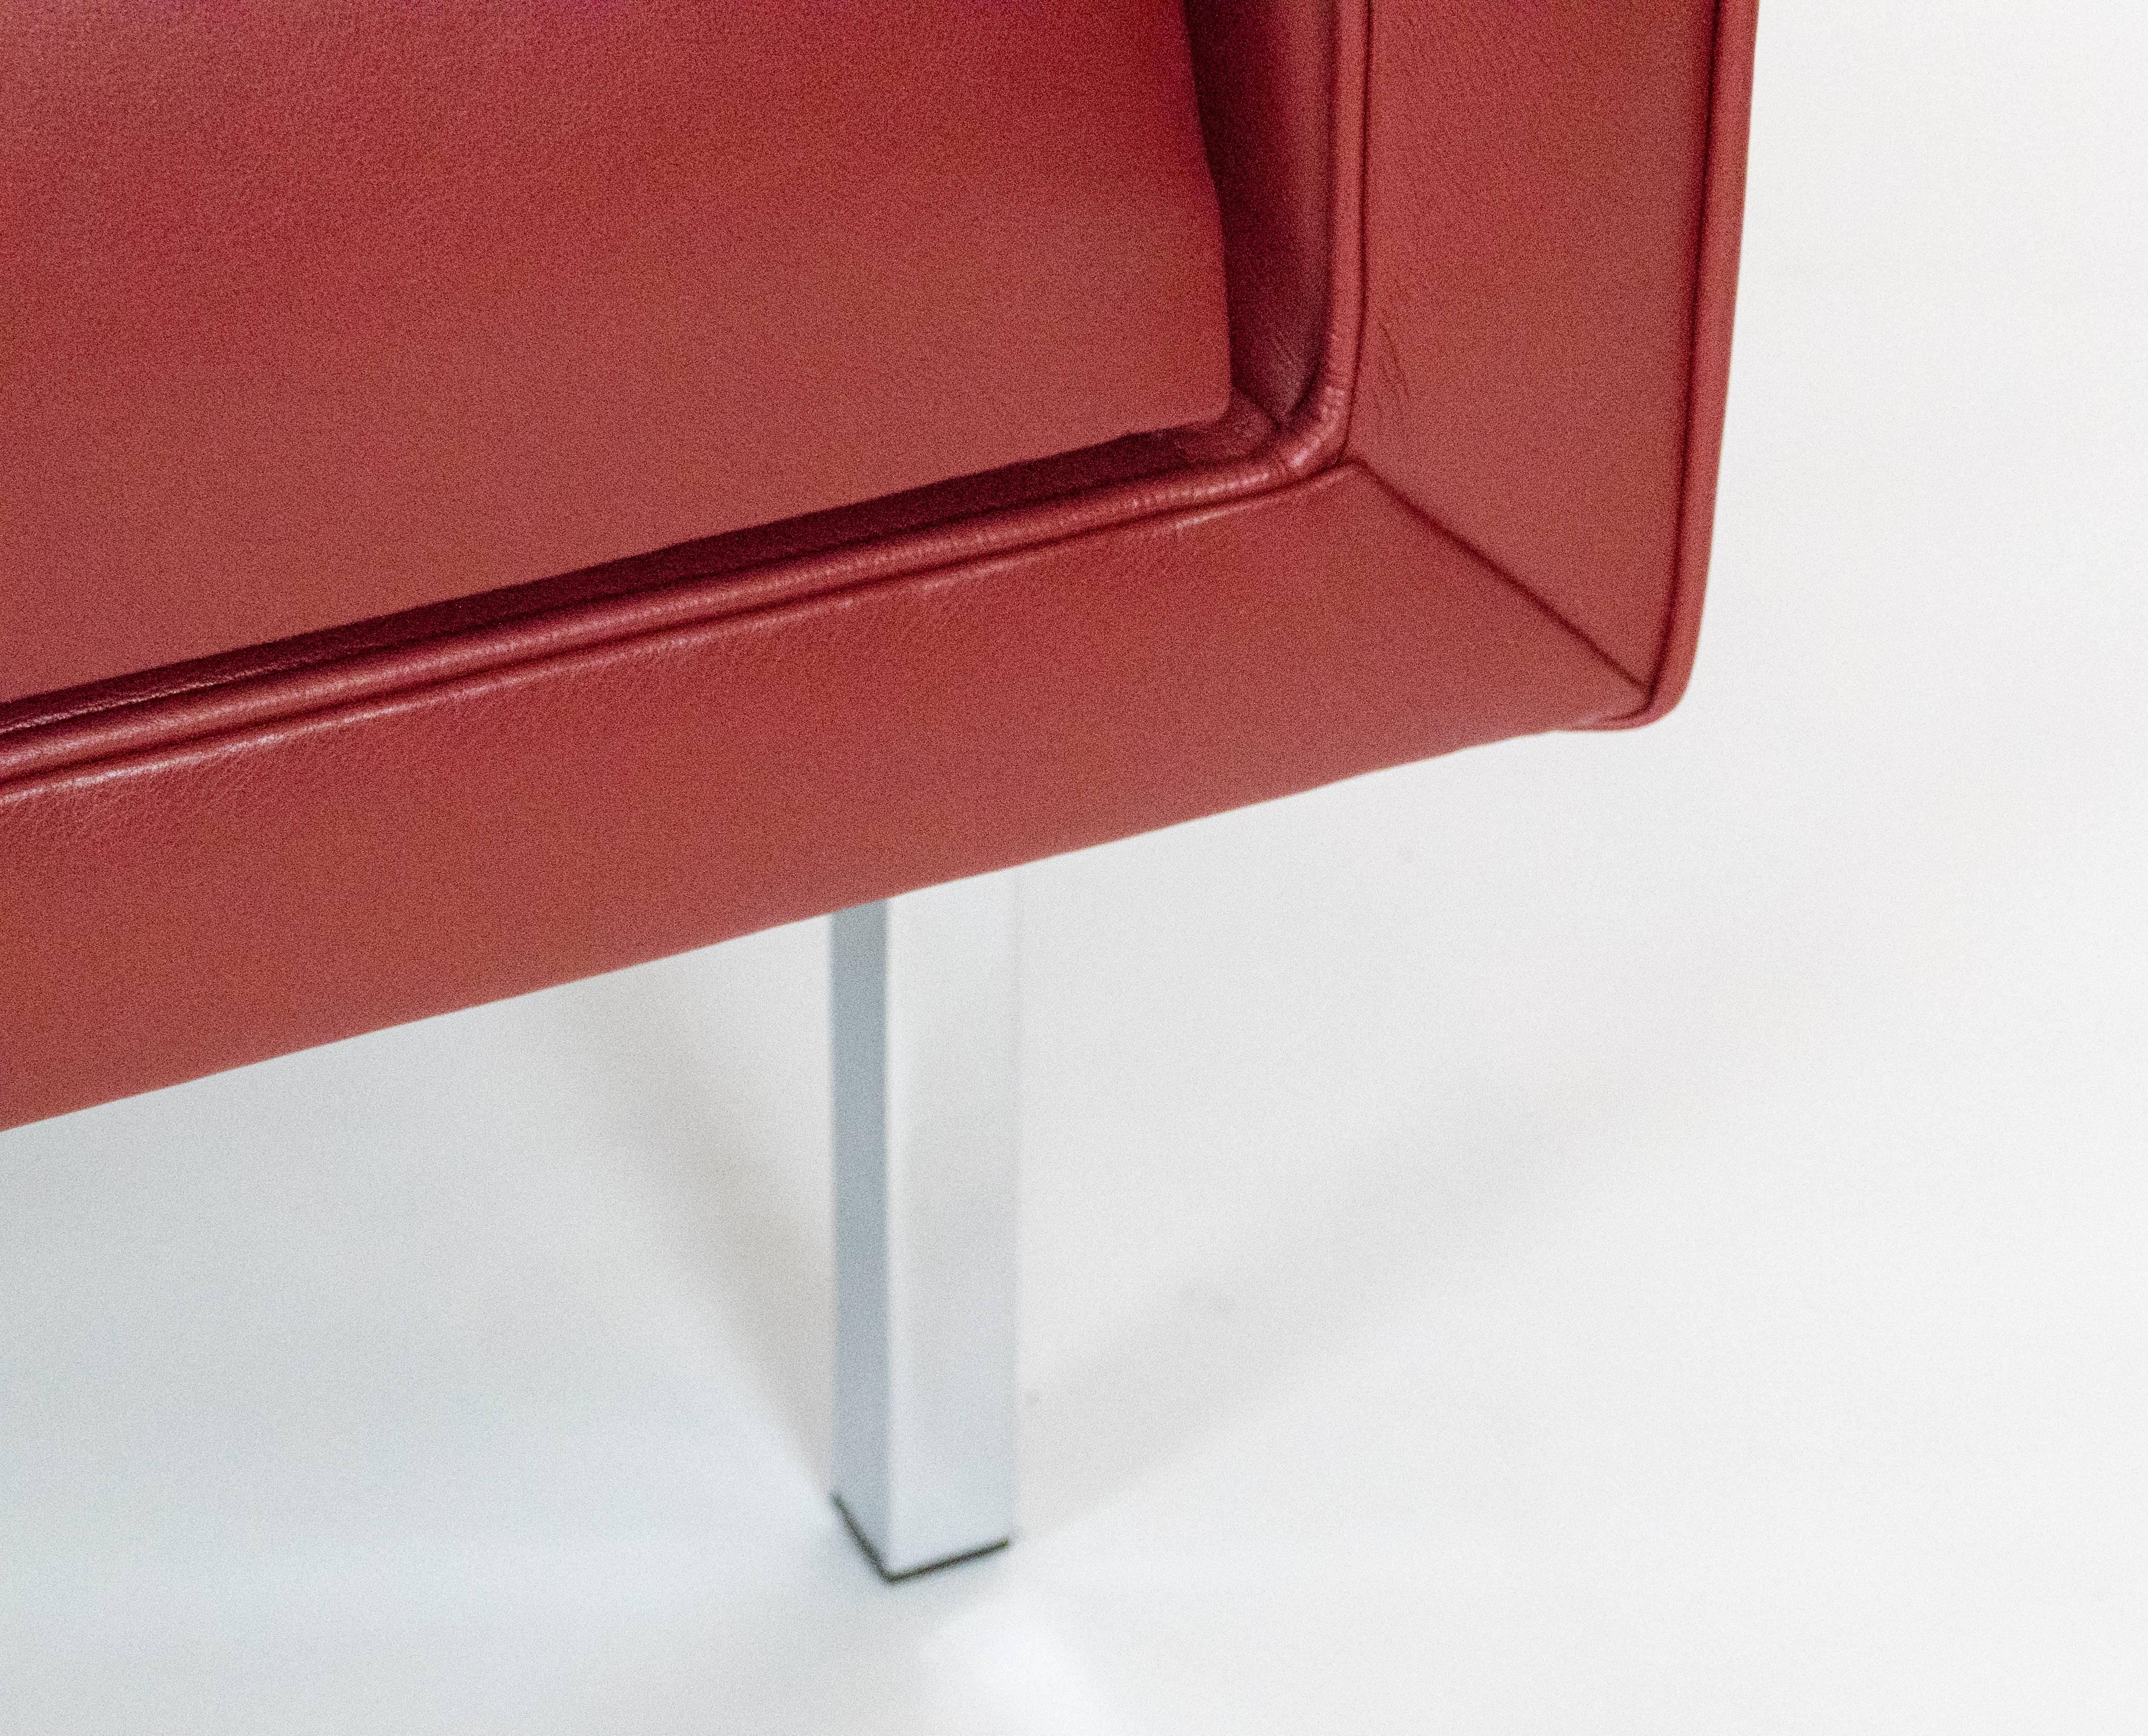 Tech-Stühle von Bourgeois Boheme Atelier (Leder) im Angebot